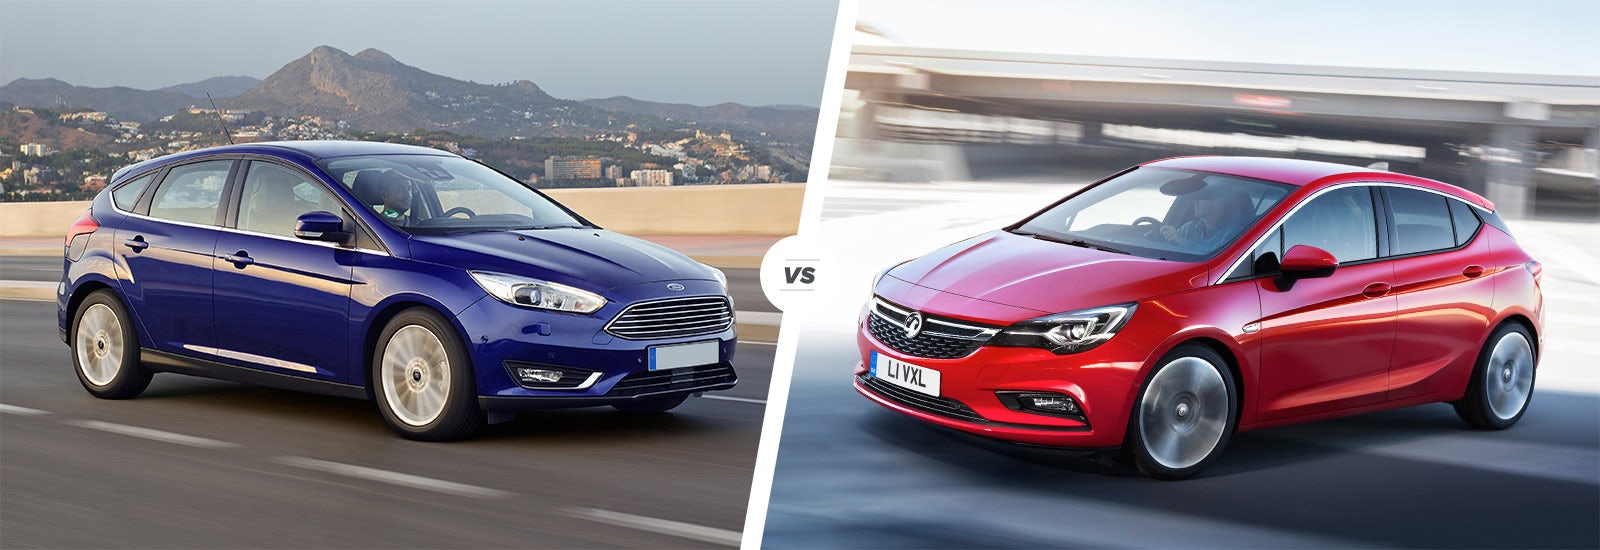 karbonade Wrijven sponsor Ford Focus vs Vauxhall Astra comparison | carwow